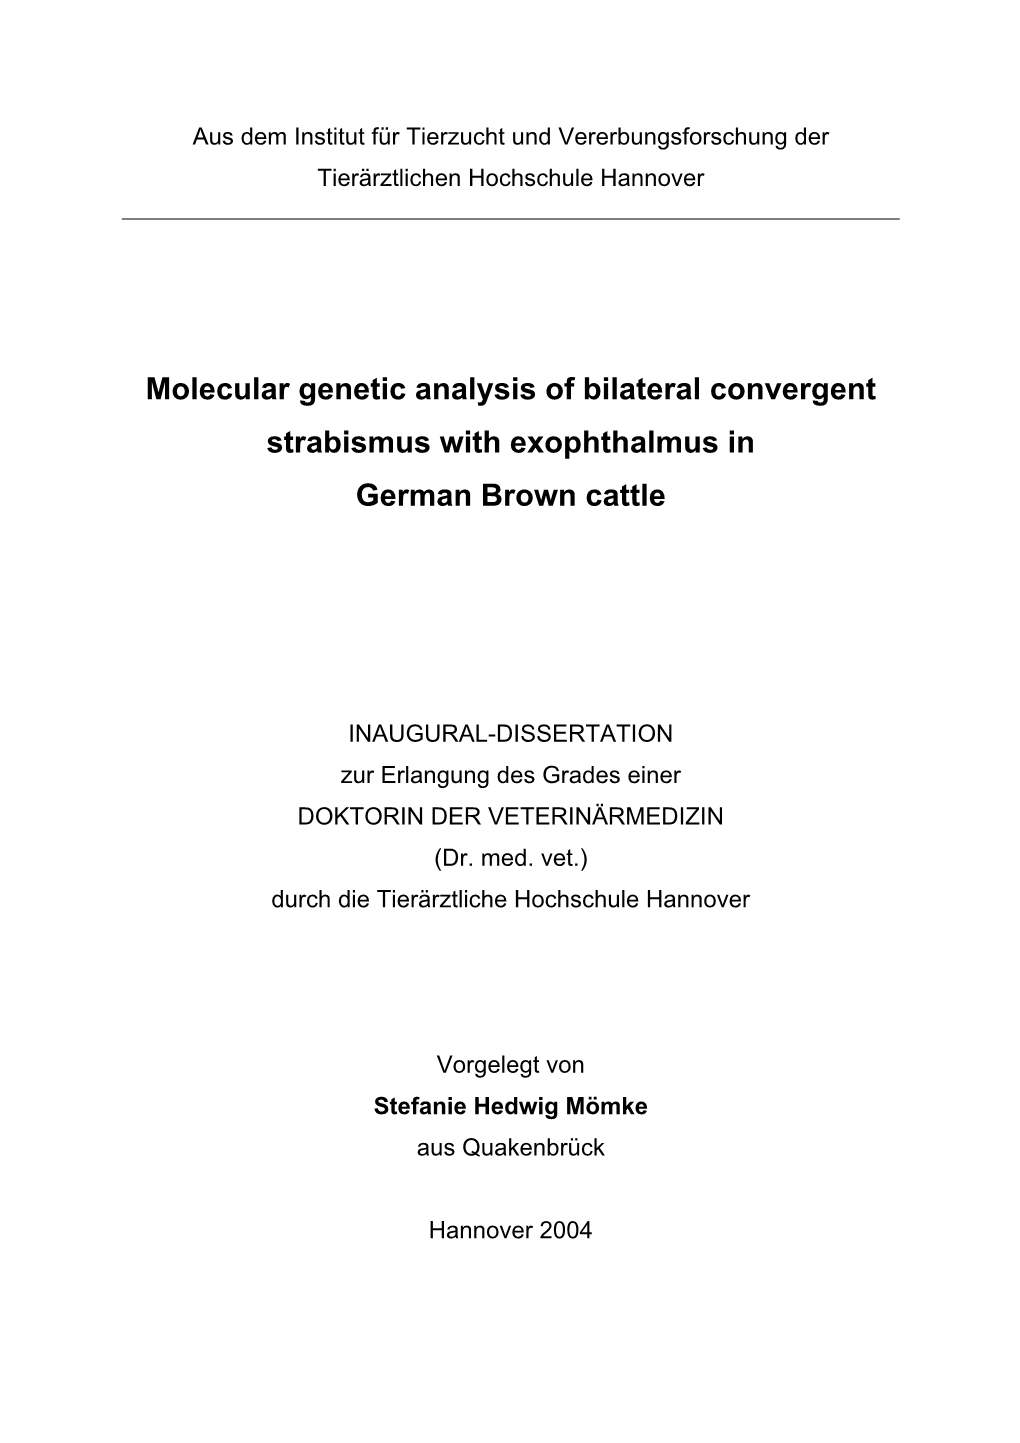 Molecular Genetic Analysis of Bilateral Convergent Strabismus with Exophthalmus in German Brown Cattle